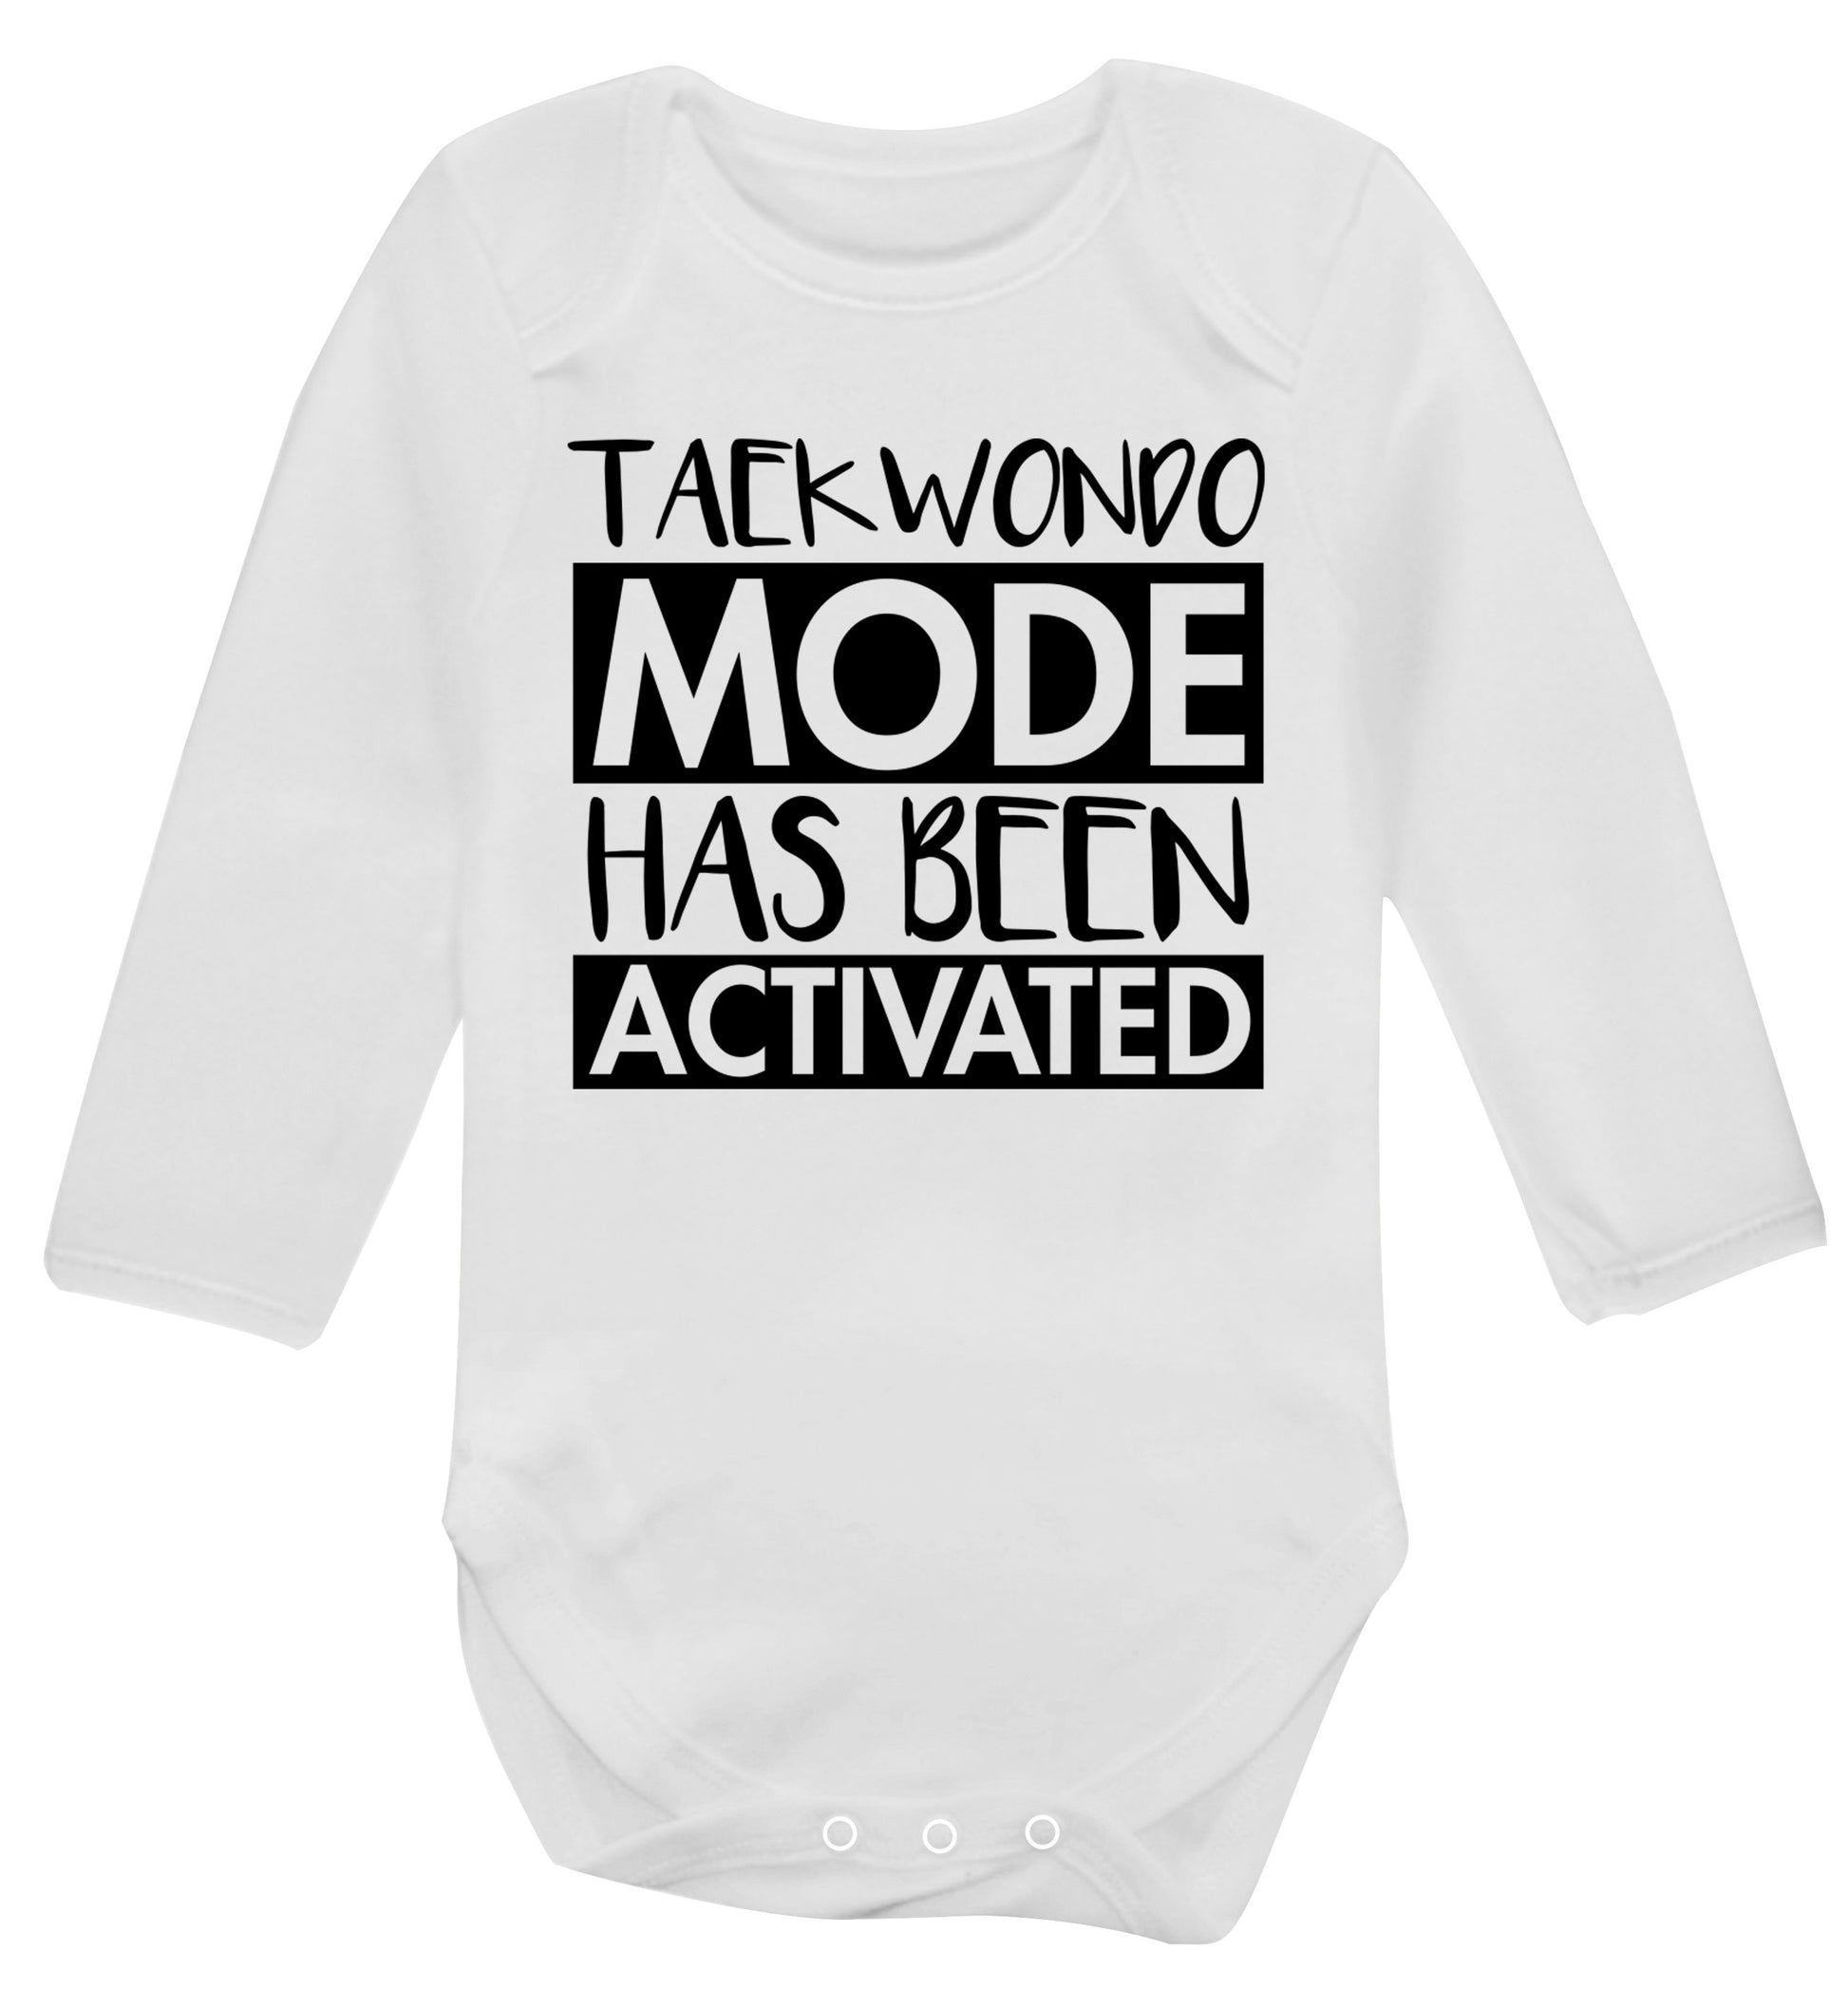 Taekwondo mode activated Baby Vest long sleeved white 6-12 months